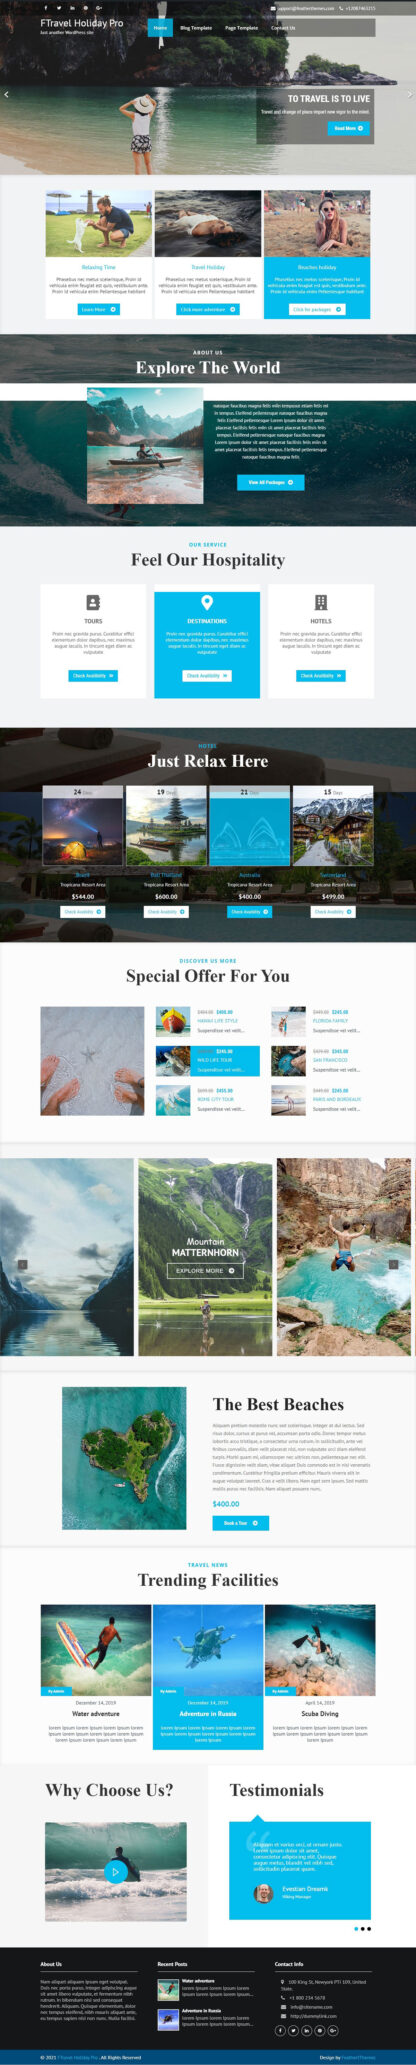 FTravel Holiday WordPress Theme - Dream Vacation Website Design